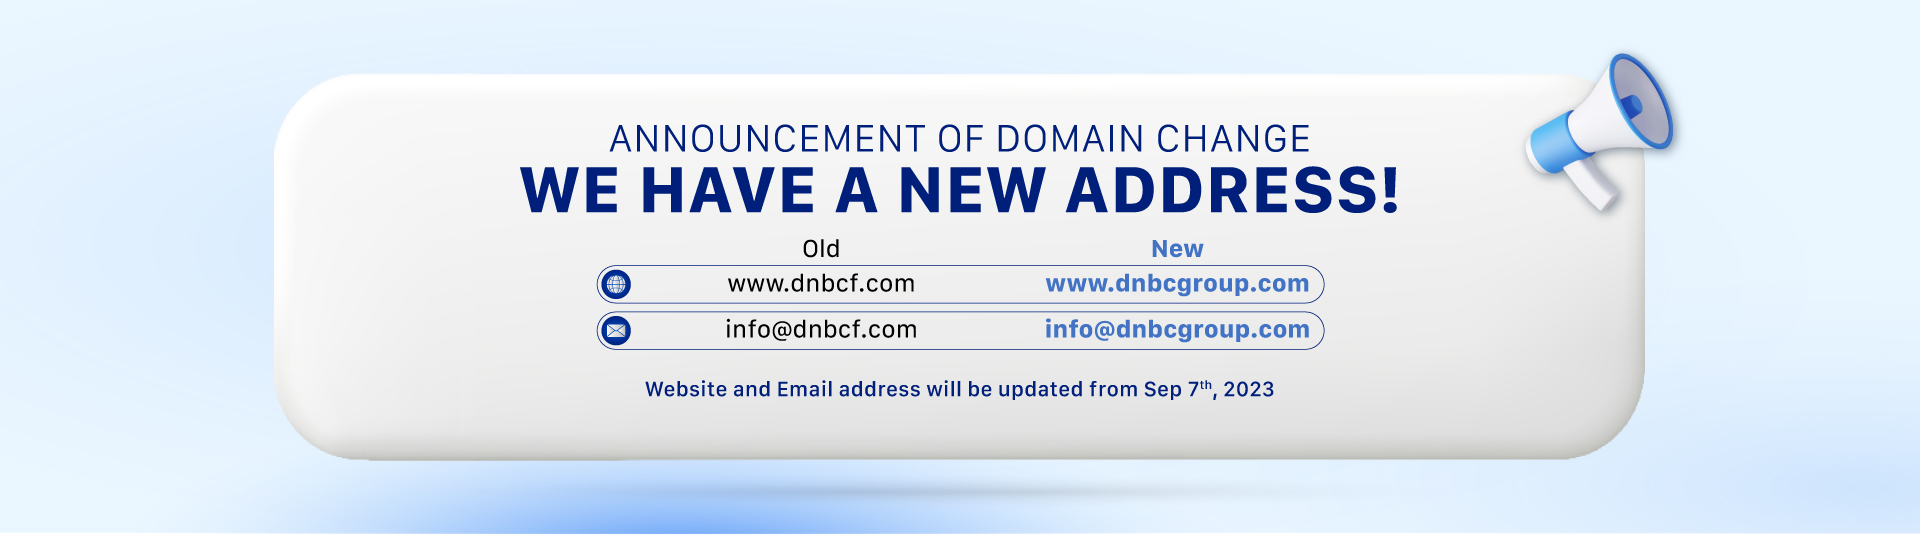 Announcement of Domain Change